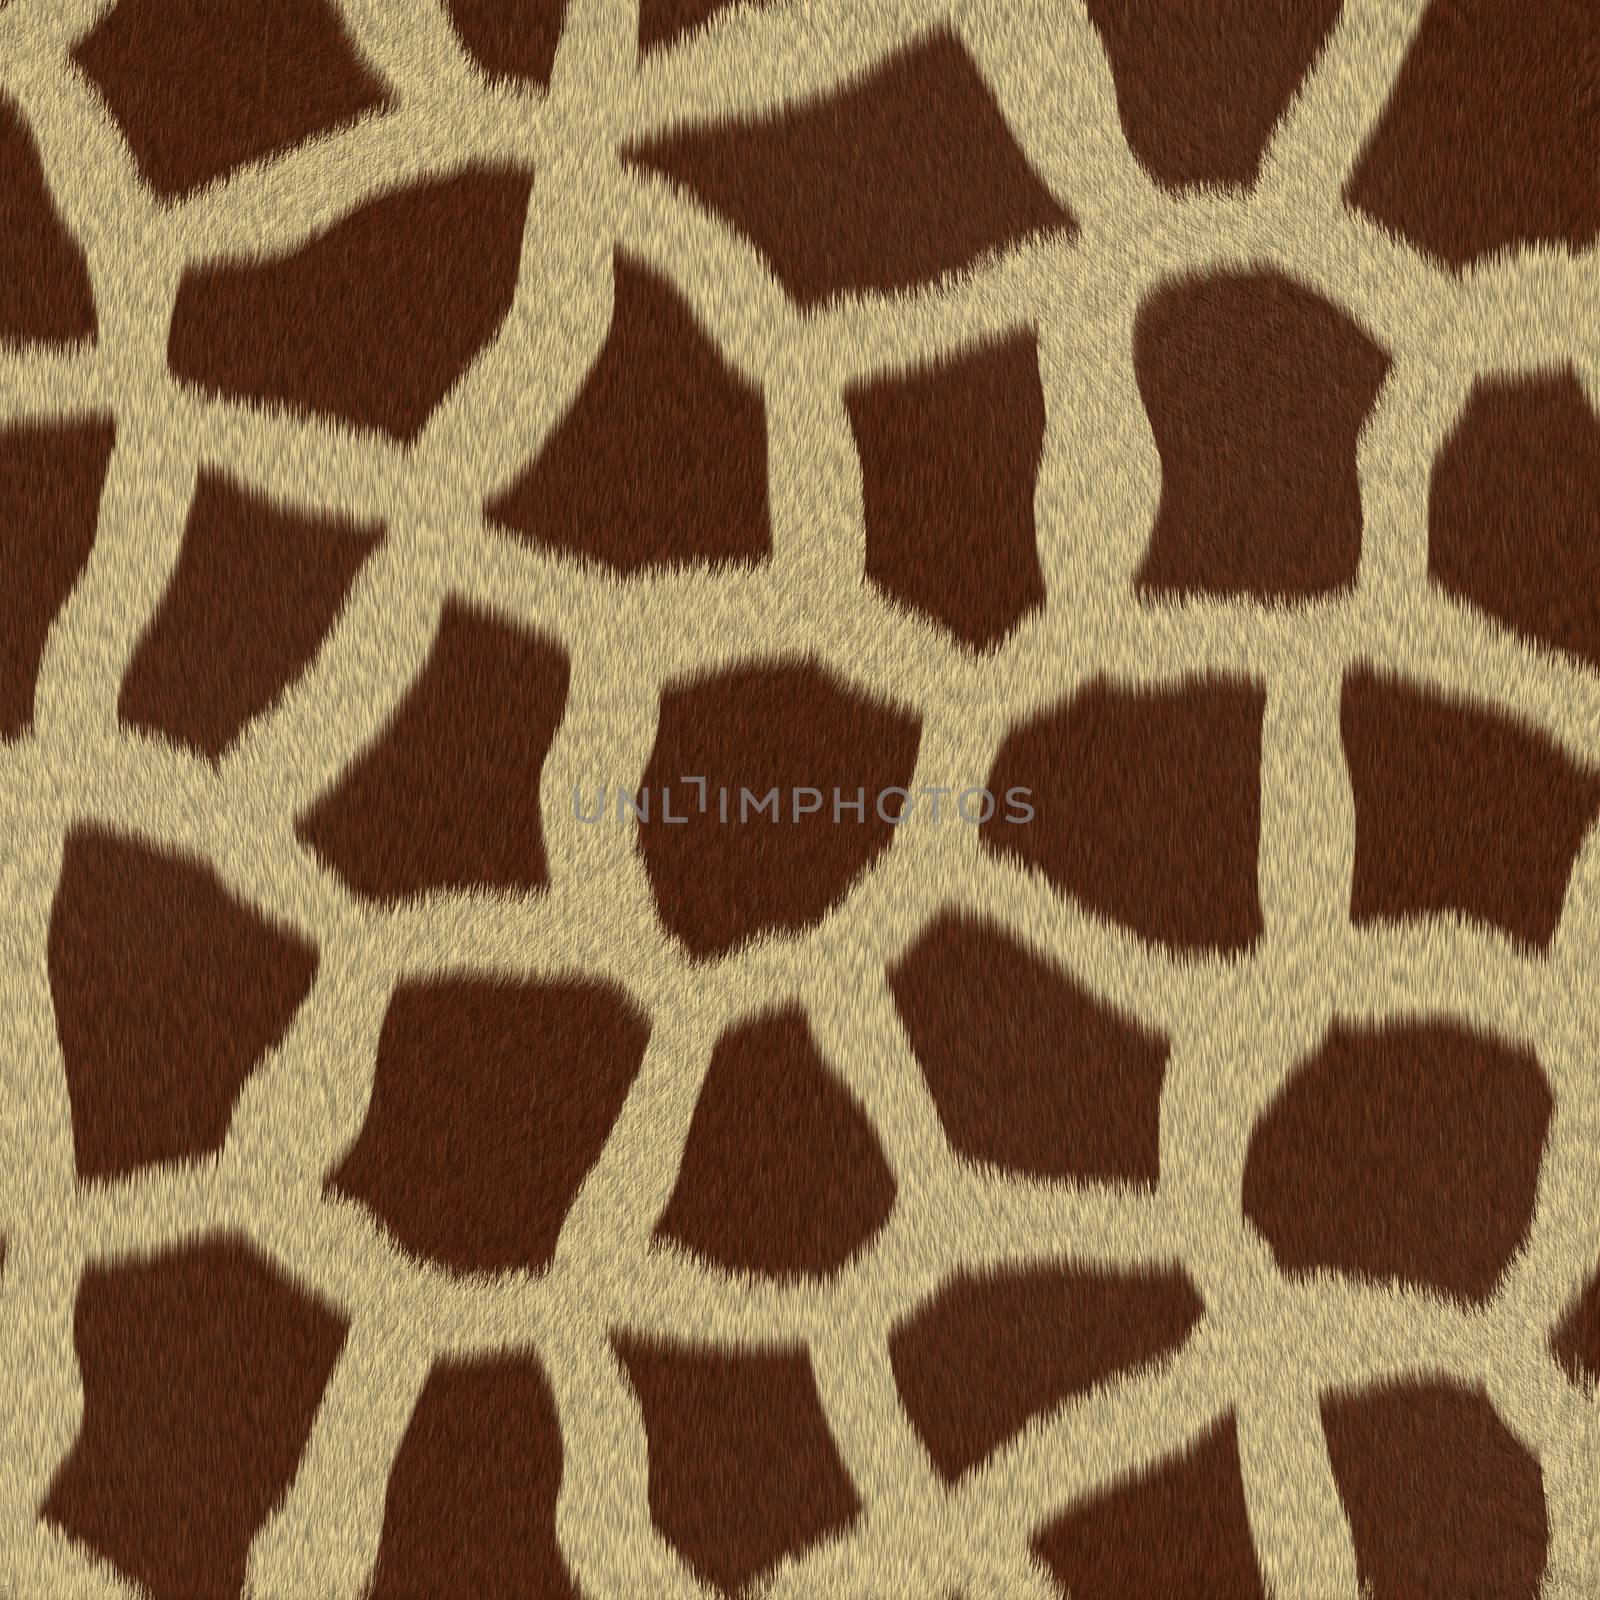 Giraffe fur (skin) background or texture by Attila